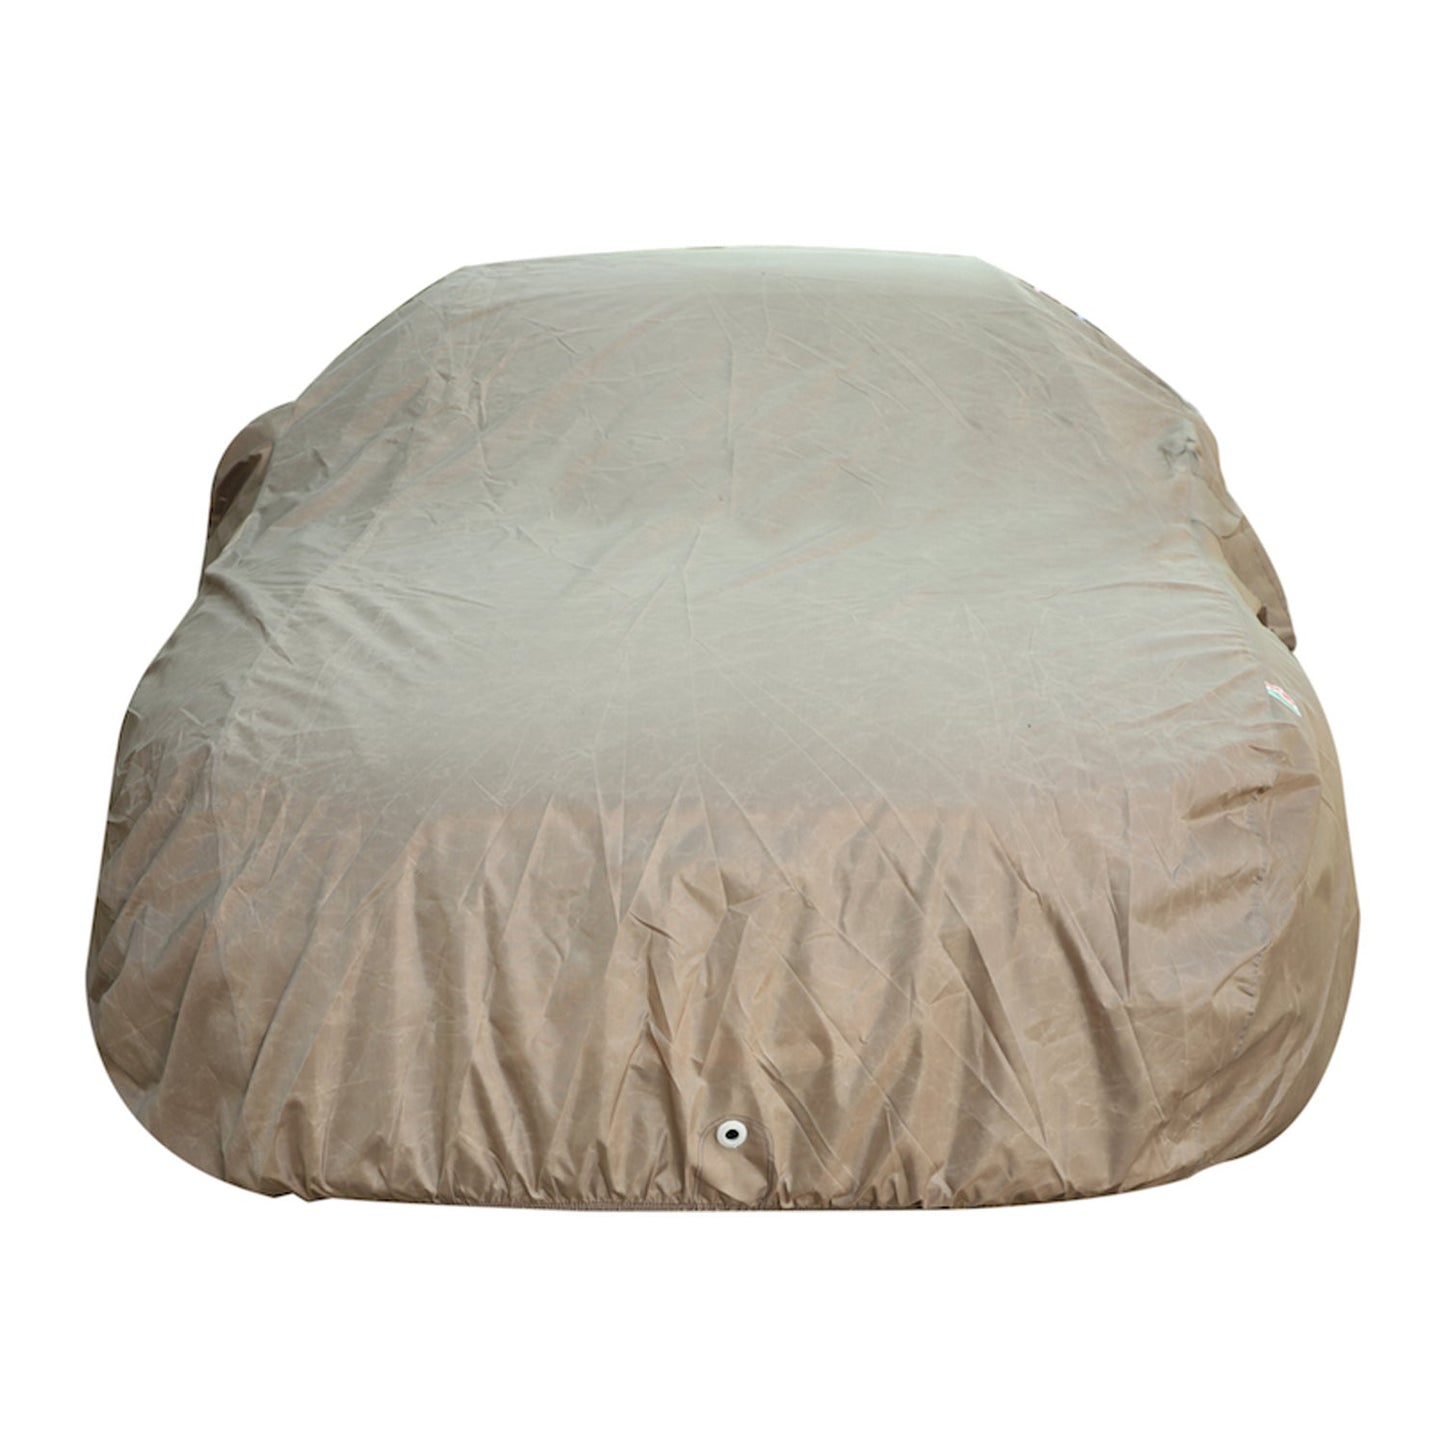 Oshotto Brown 100% Waterproof Car Body Cover with Mirror Pockets For Hyundai Creta 2020-2023